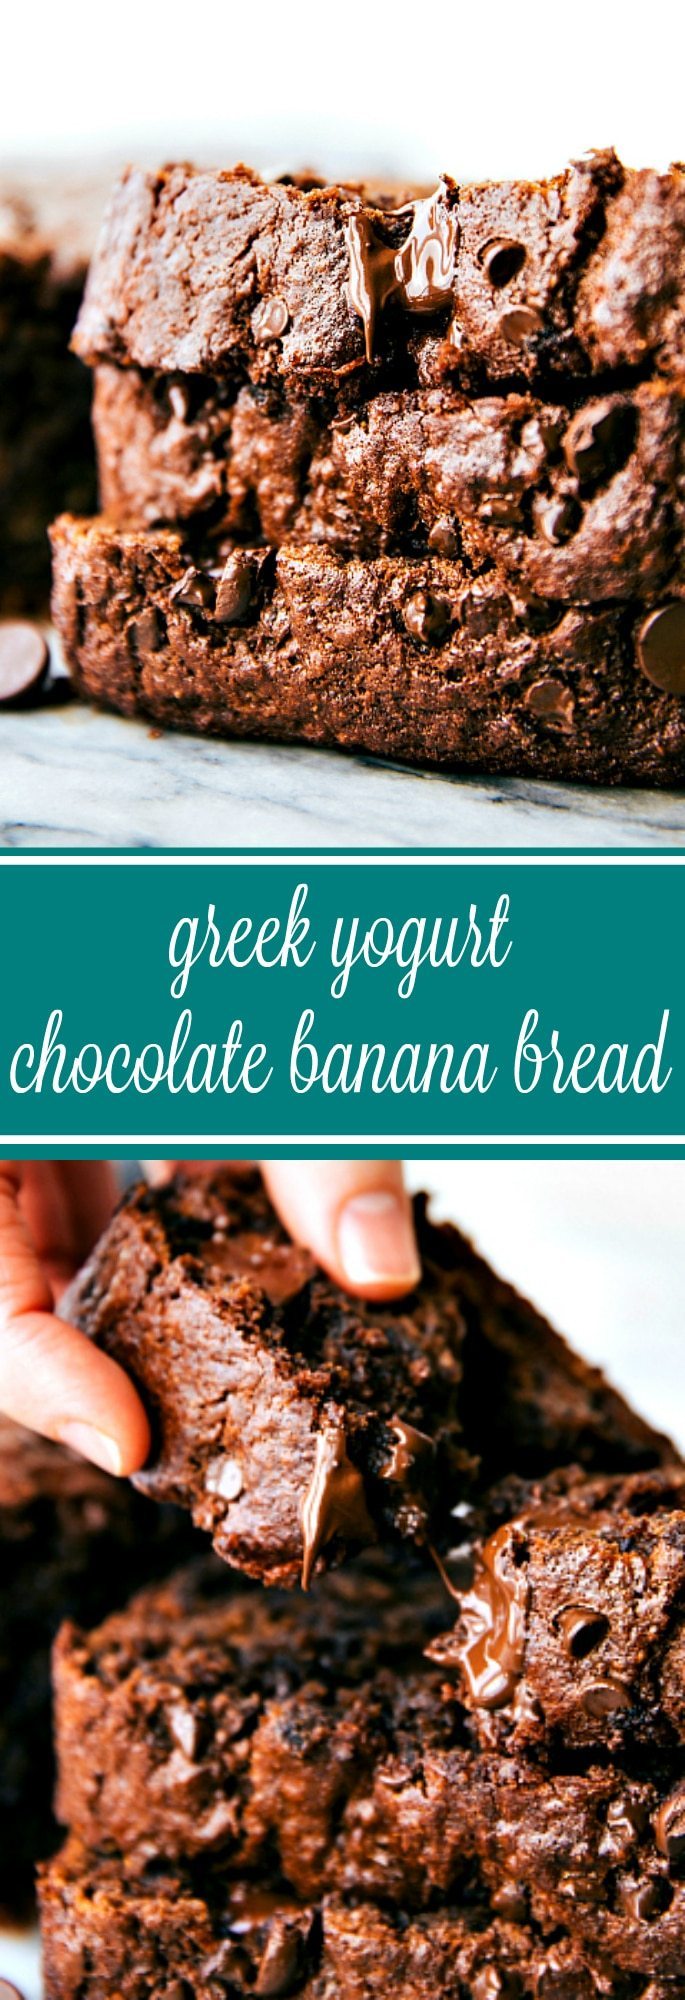 HEALTHY GREEK YOGURT CHOCOLATE BANANA BREAD! A delicious and moist chocolate banana bread made with healthier ingredients! One bowl, no mixers required!